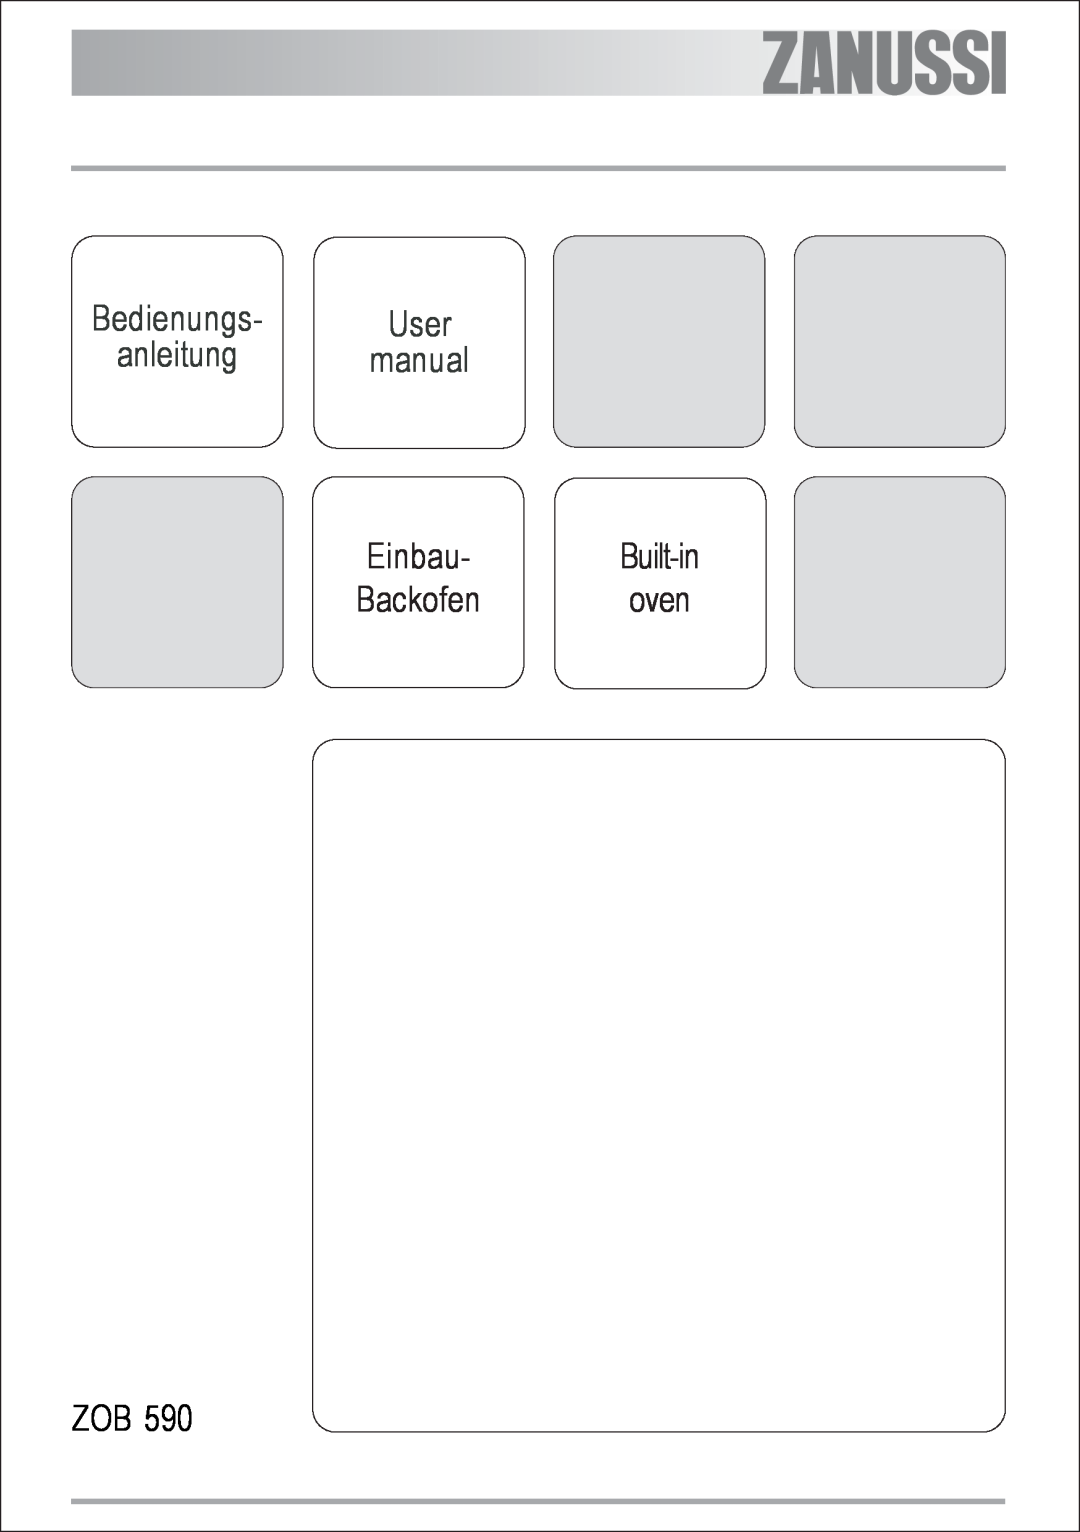 Zanussi ZOB 590 manual Built-in, Bedienungs, User, anleitung, Einbau, Backofen, oven 